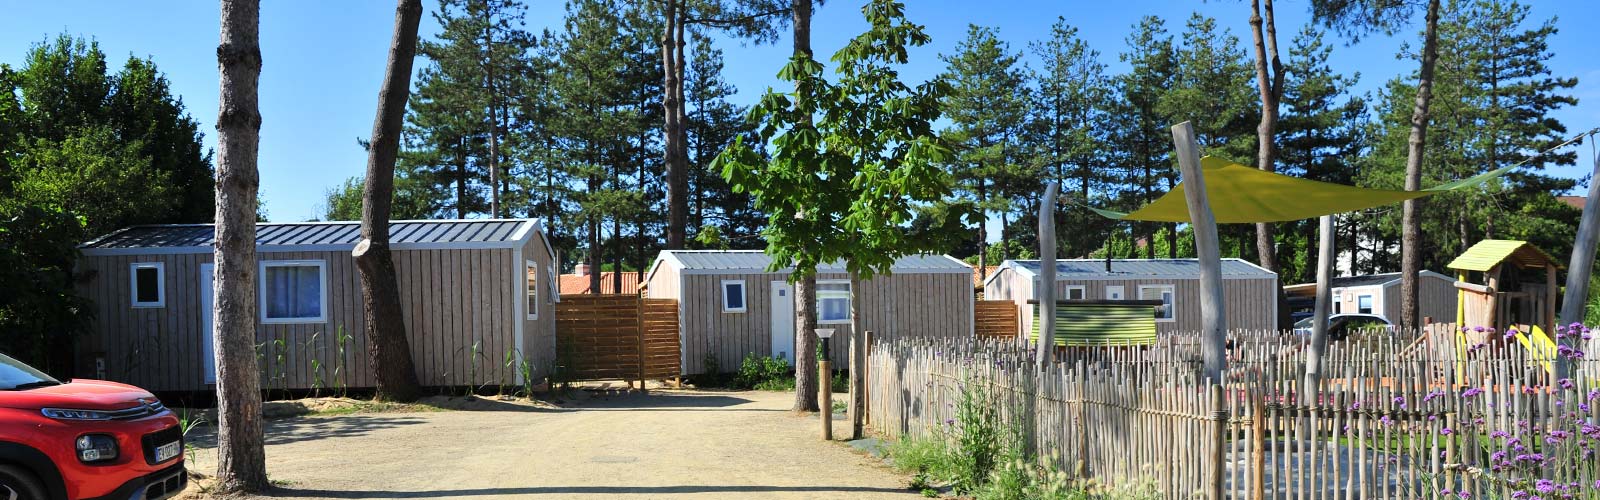 Village of mobile homes at Le Fief campsite in Saint-Brevin in Loire-Atlantique